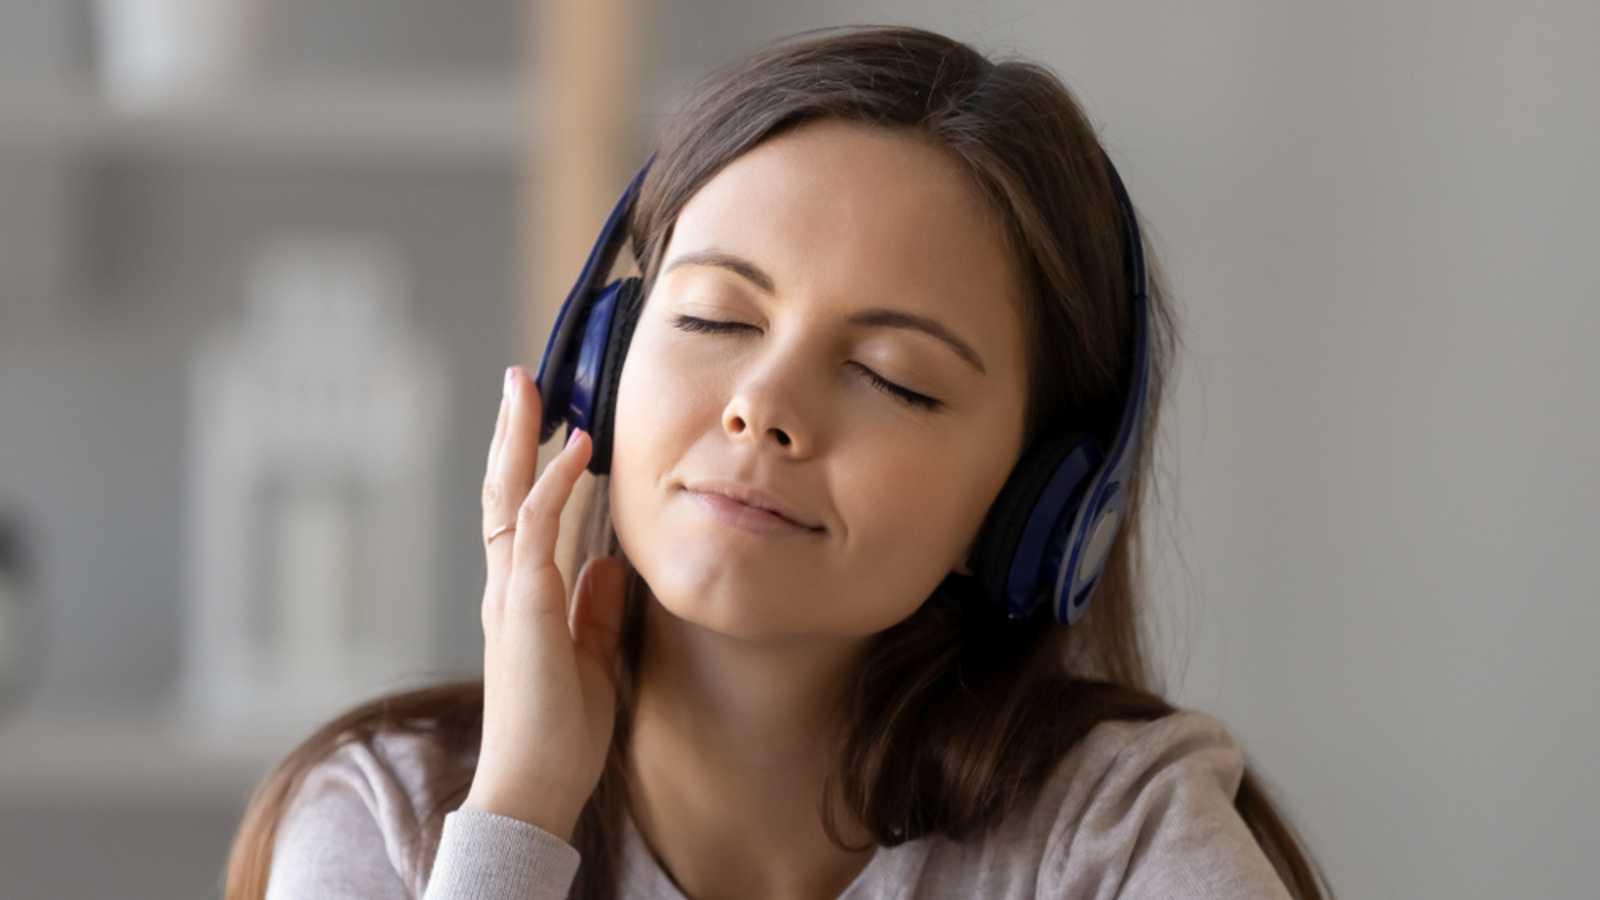 Woman Hearing Pop Song